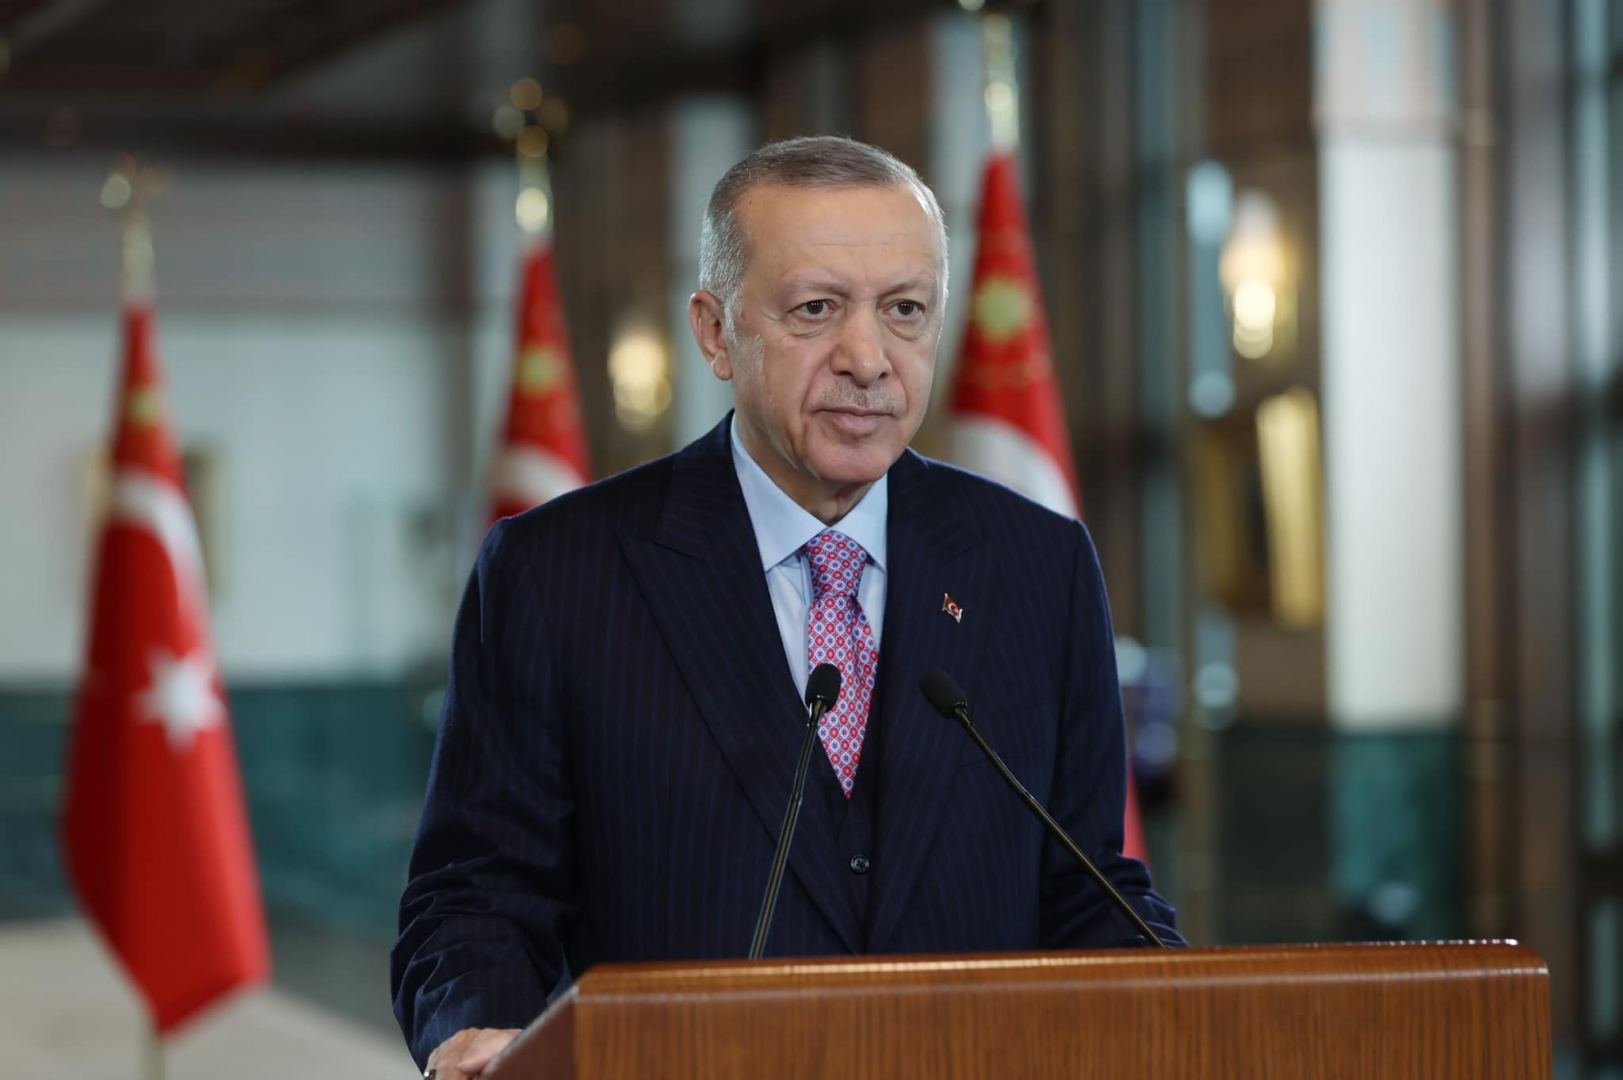 Unity - cornerstone of strength for countries in region, says president of Türkiye